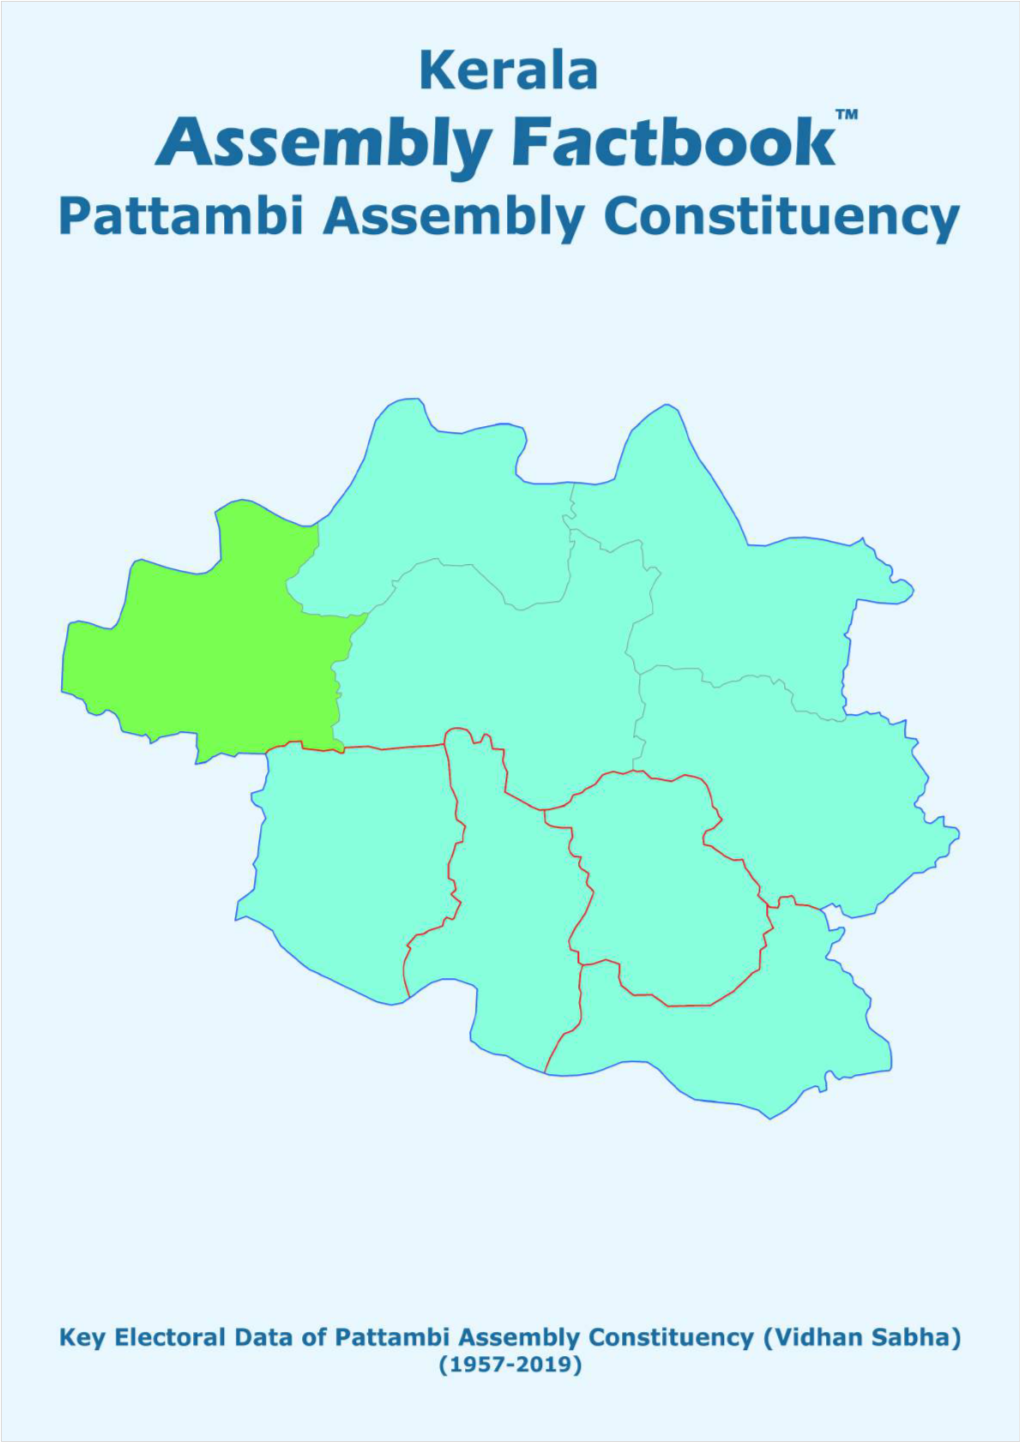 Pattambi Assembly Kerala Factbook